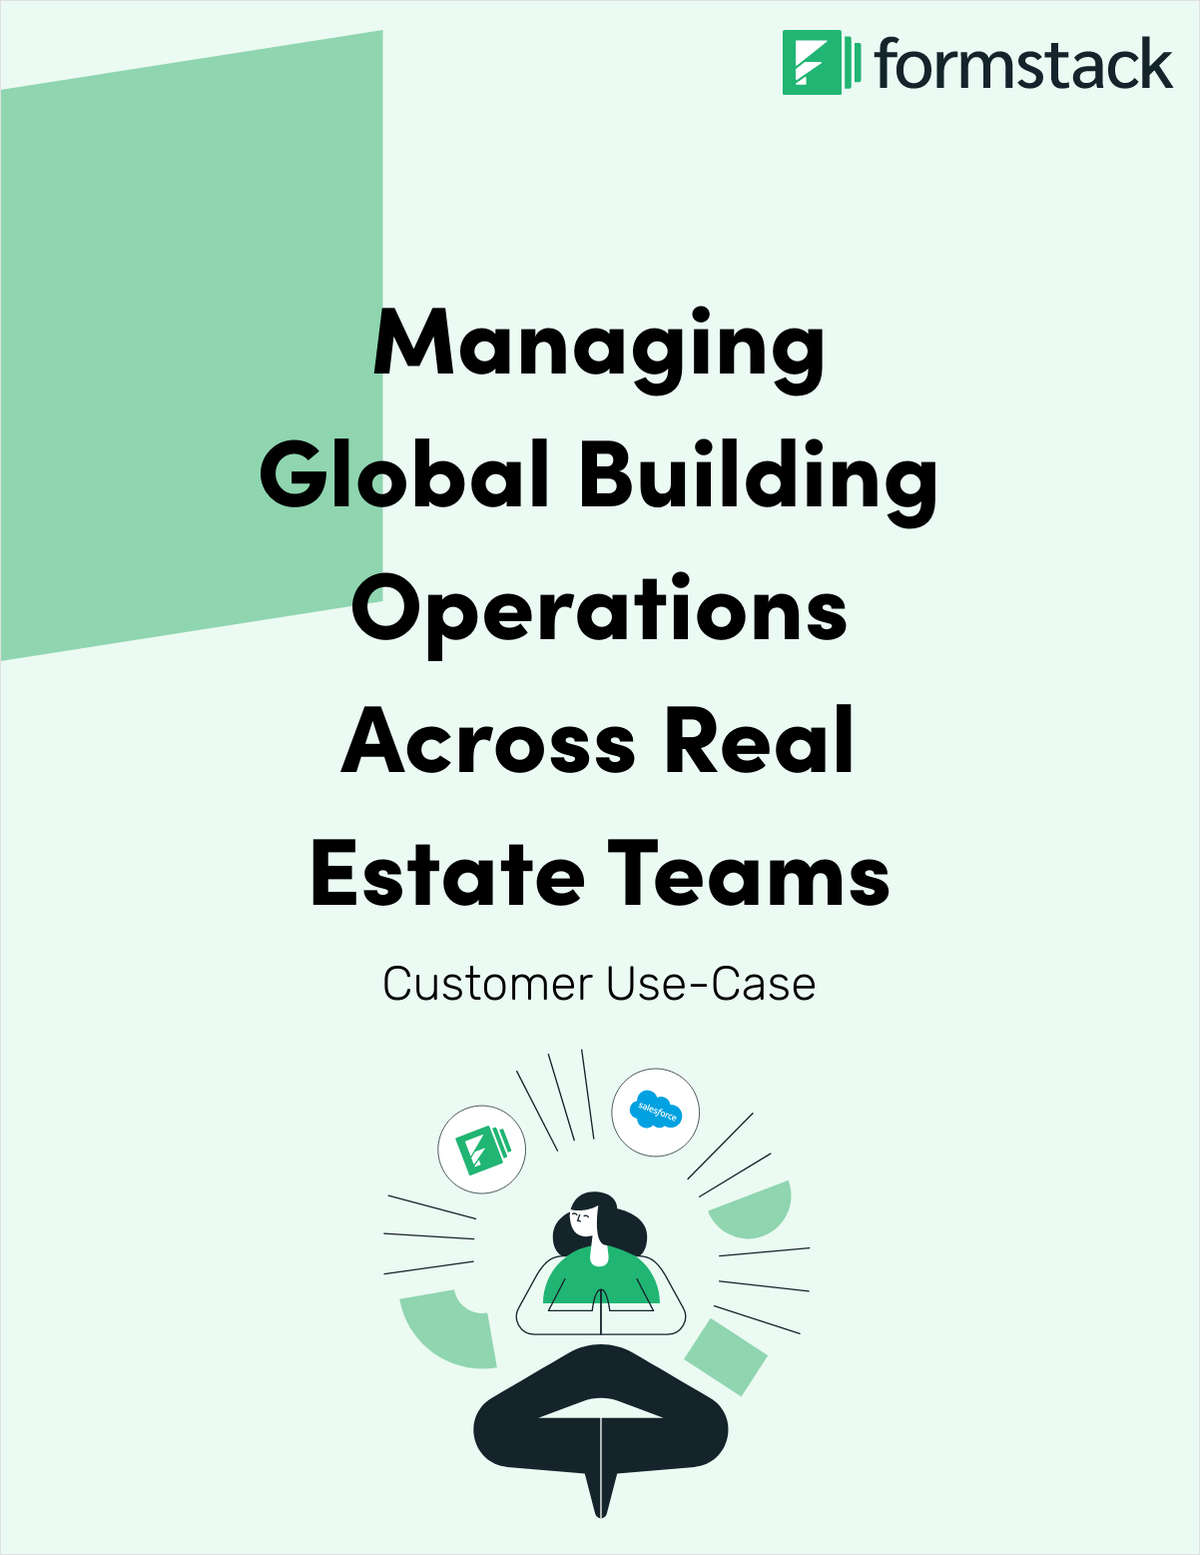 Managing Global Building Operations Across Real Estate Teams